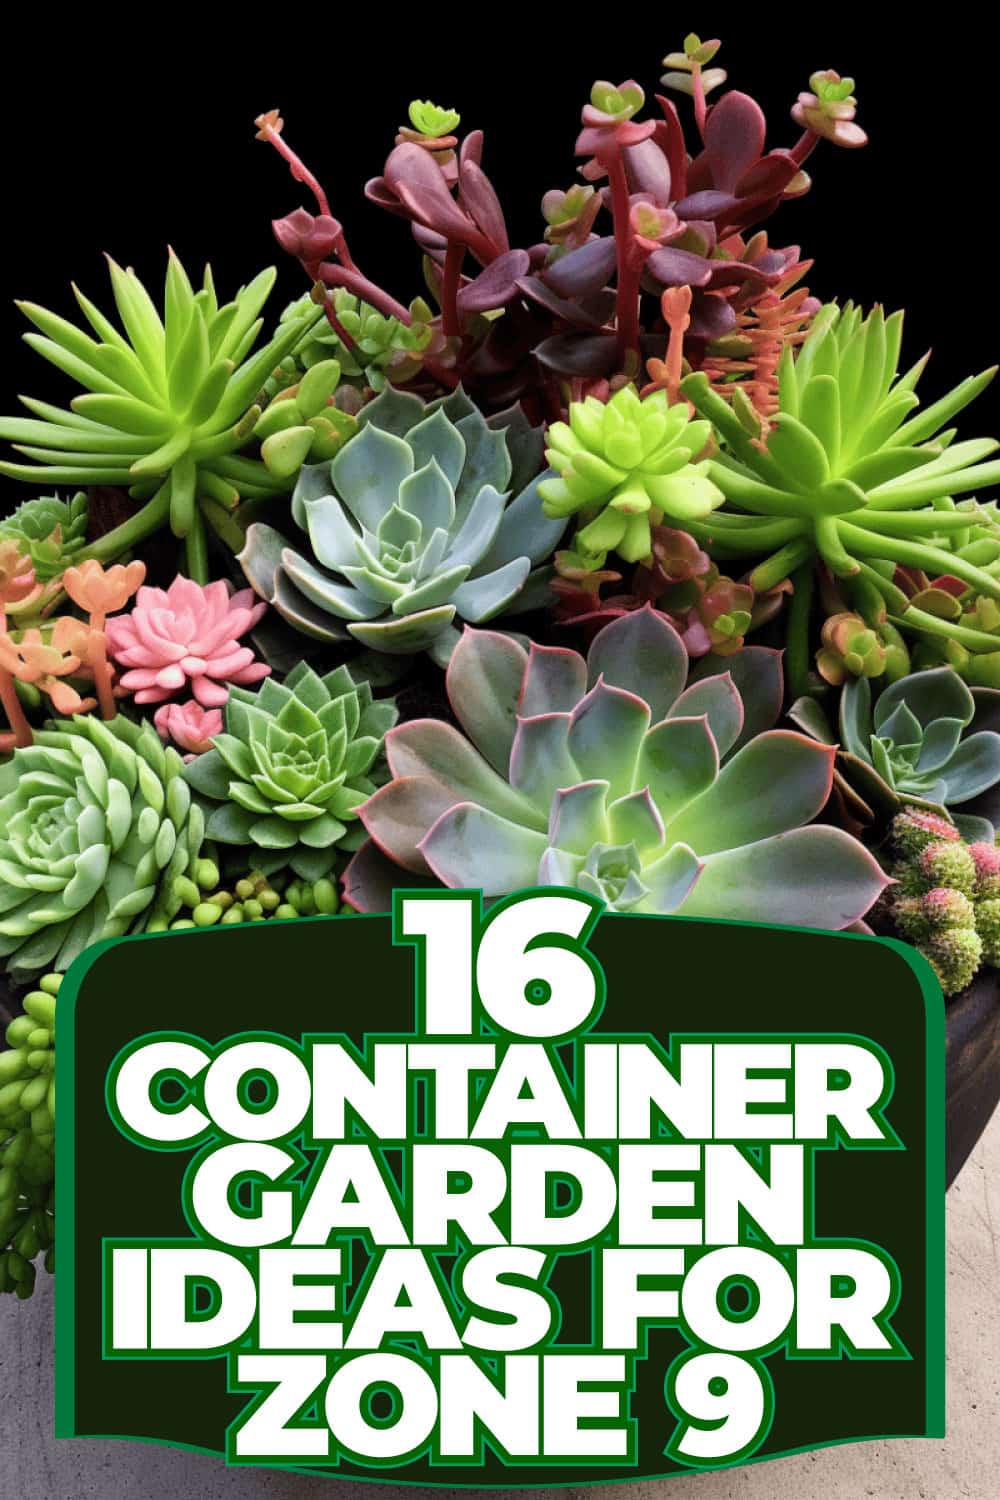 16 Container Garden Ideas For Zone 9